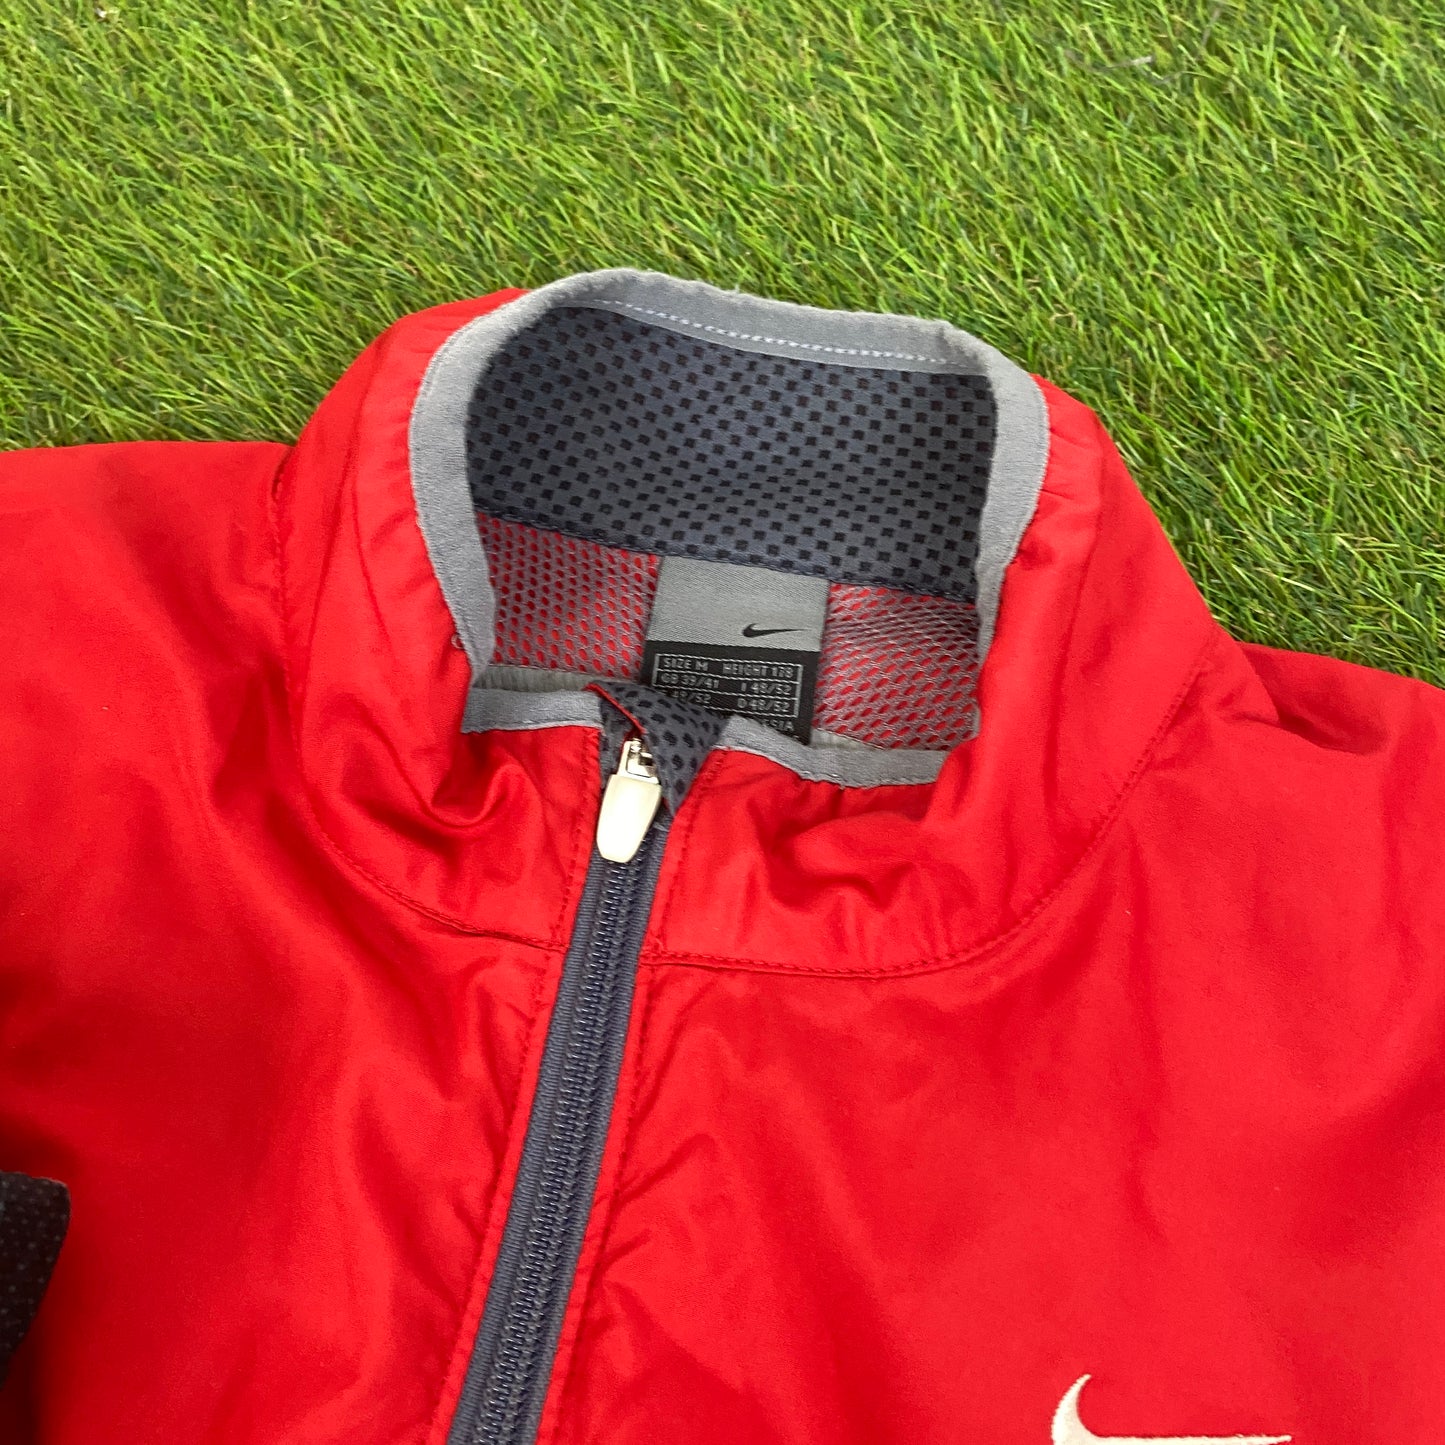 00s Nike Air Max Windbreaker Jacket + Joggers Set Red Black Medium